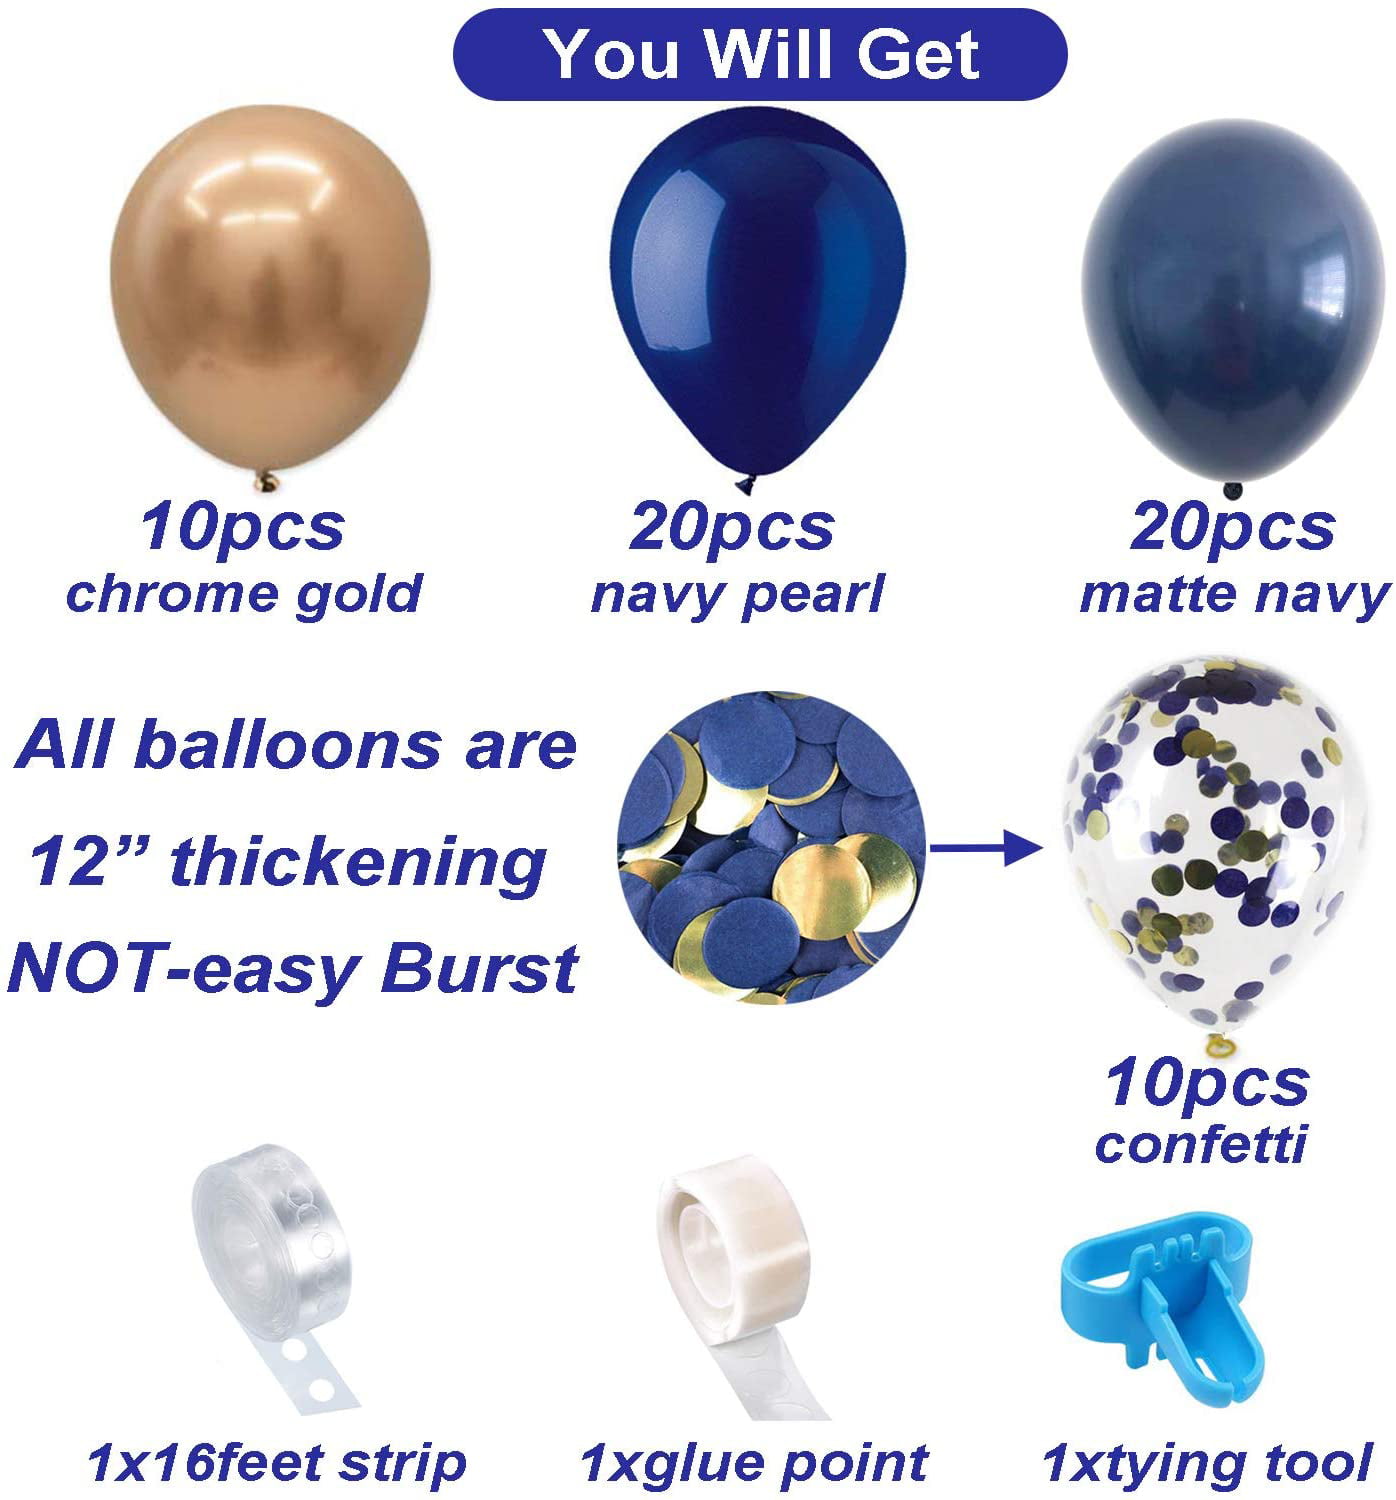 VABAMNA silver navy blue balloon arch kit, 124pcs navy blue silver white  confetti balloons garland and